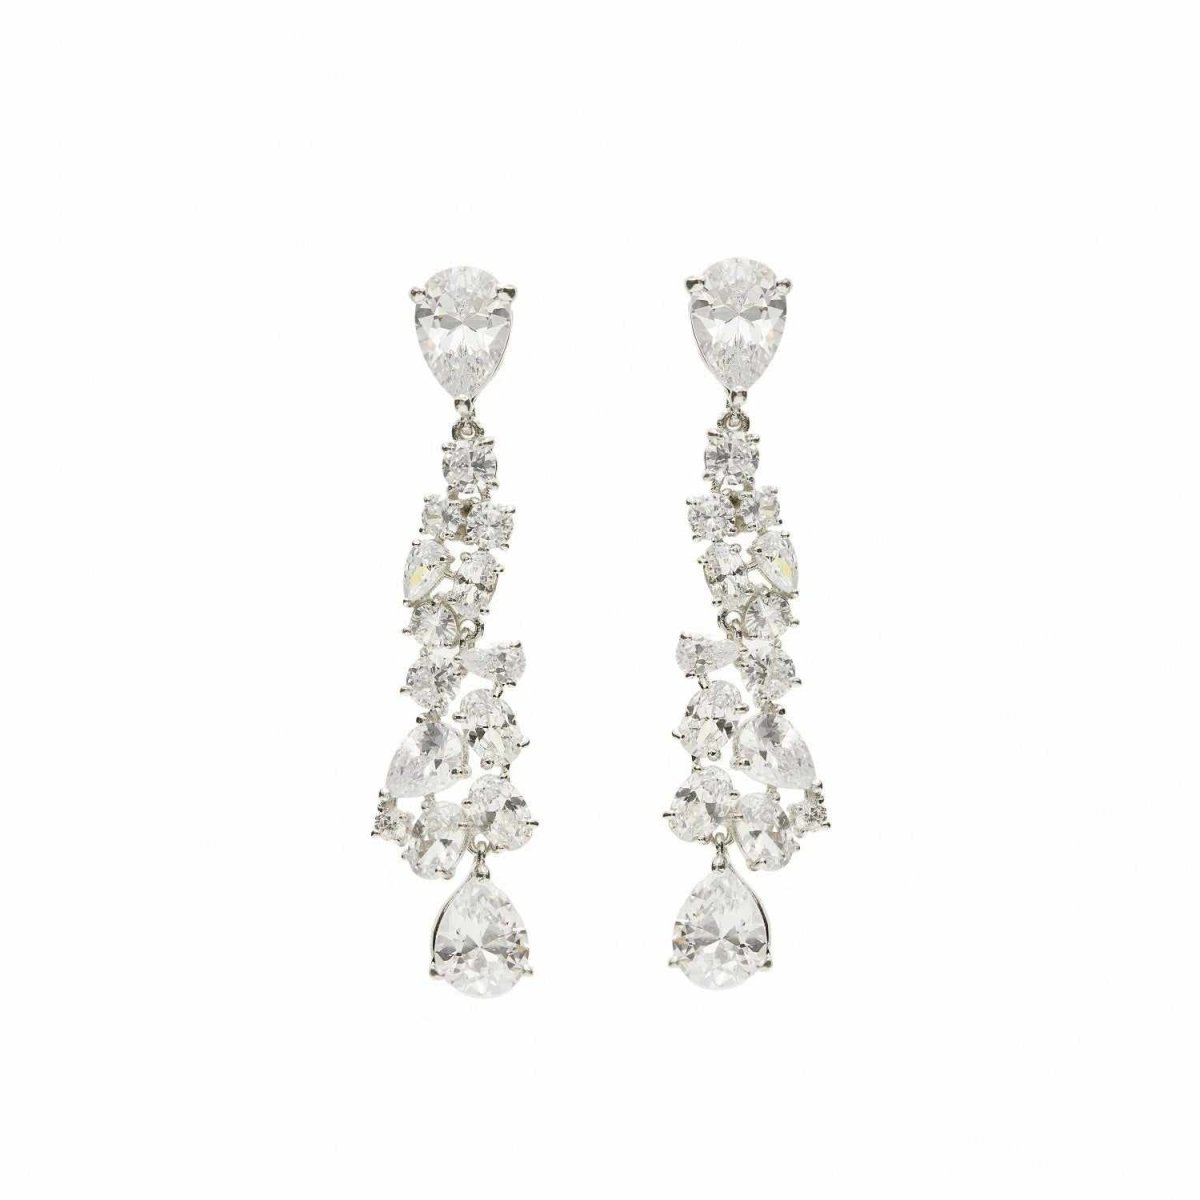 Earrings - Long brilliant bridal earrings with adamantine quartz cascade design